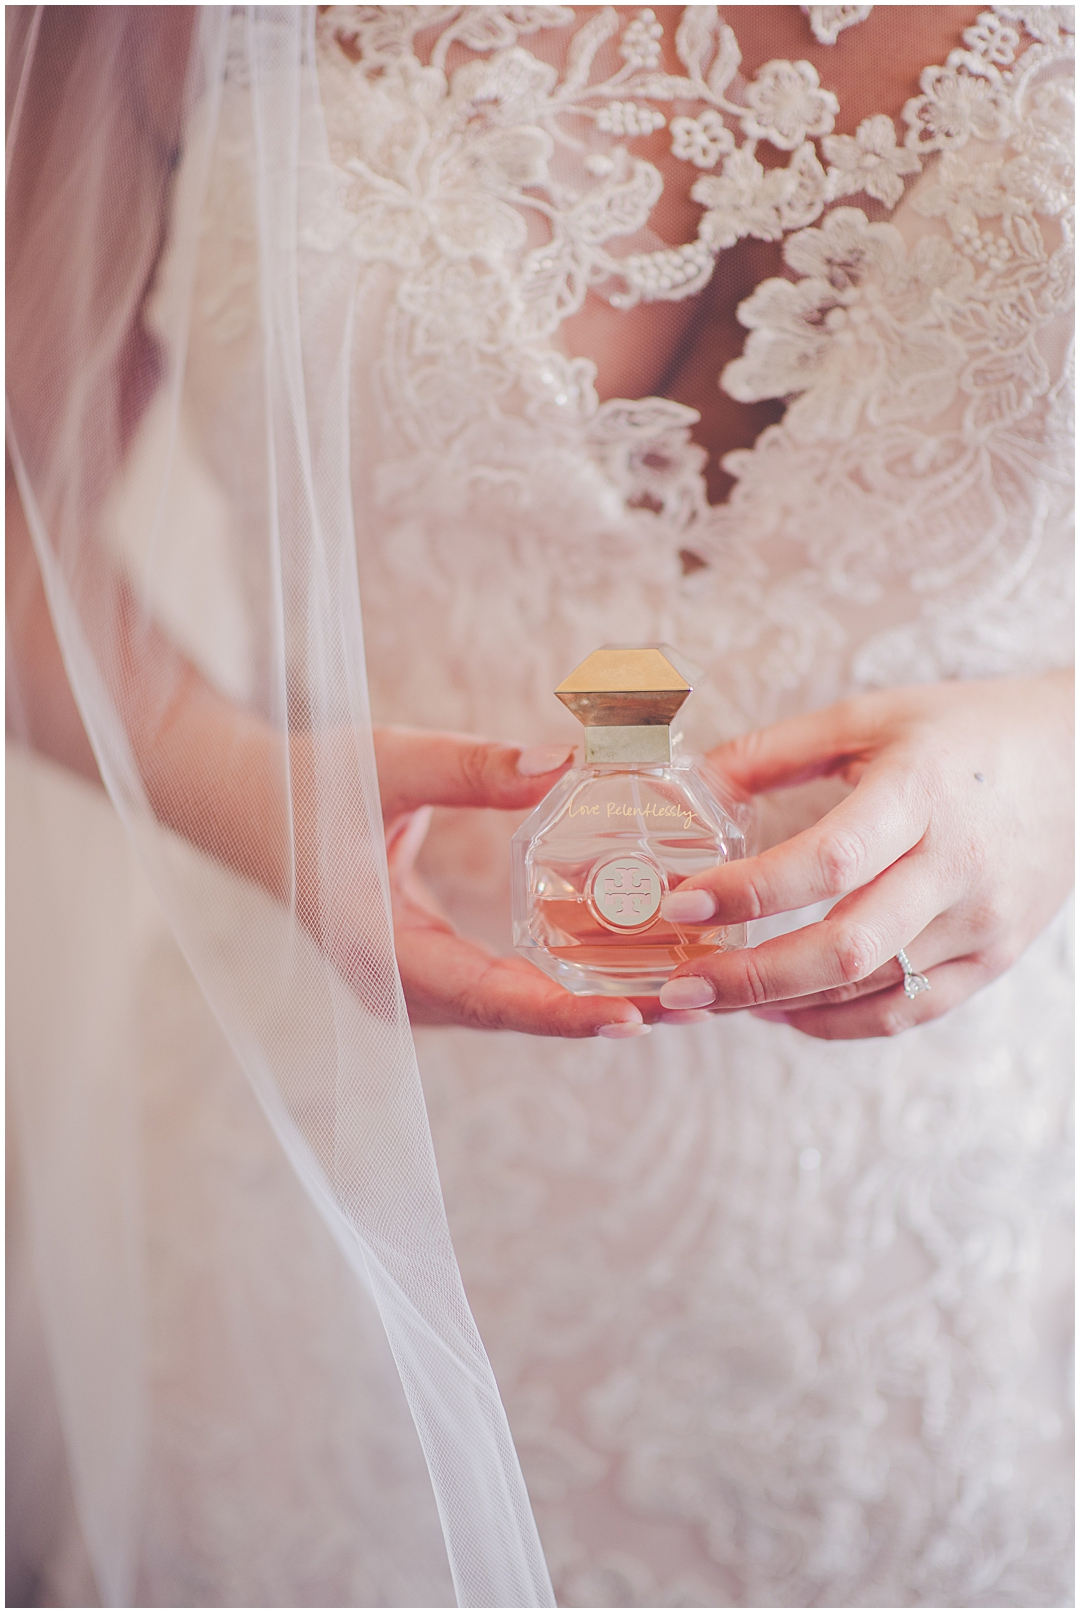 Kara Evans - Kara Evans Photographer - Central Illinois Wedding Photographer - Wedding Wednesday - Wedding Blogger - Gift Ideas for the Bride - Bride Gifts for the Bride